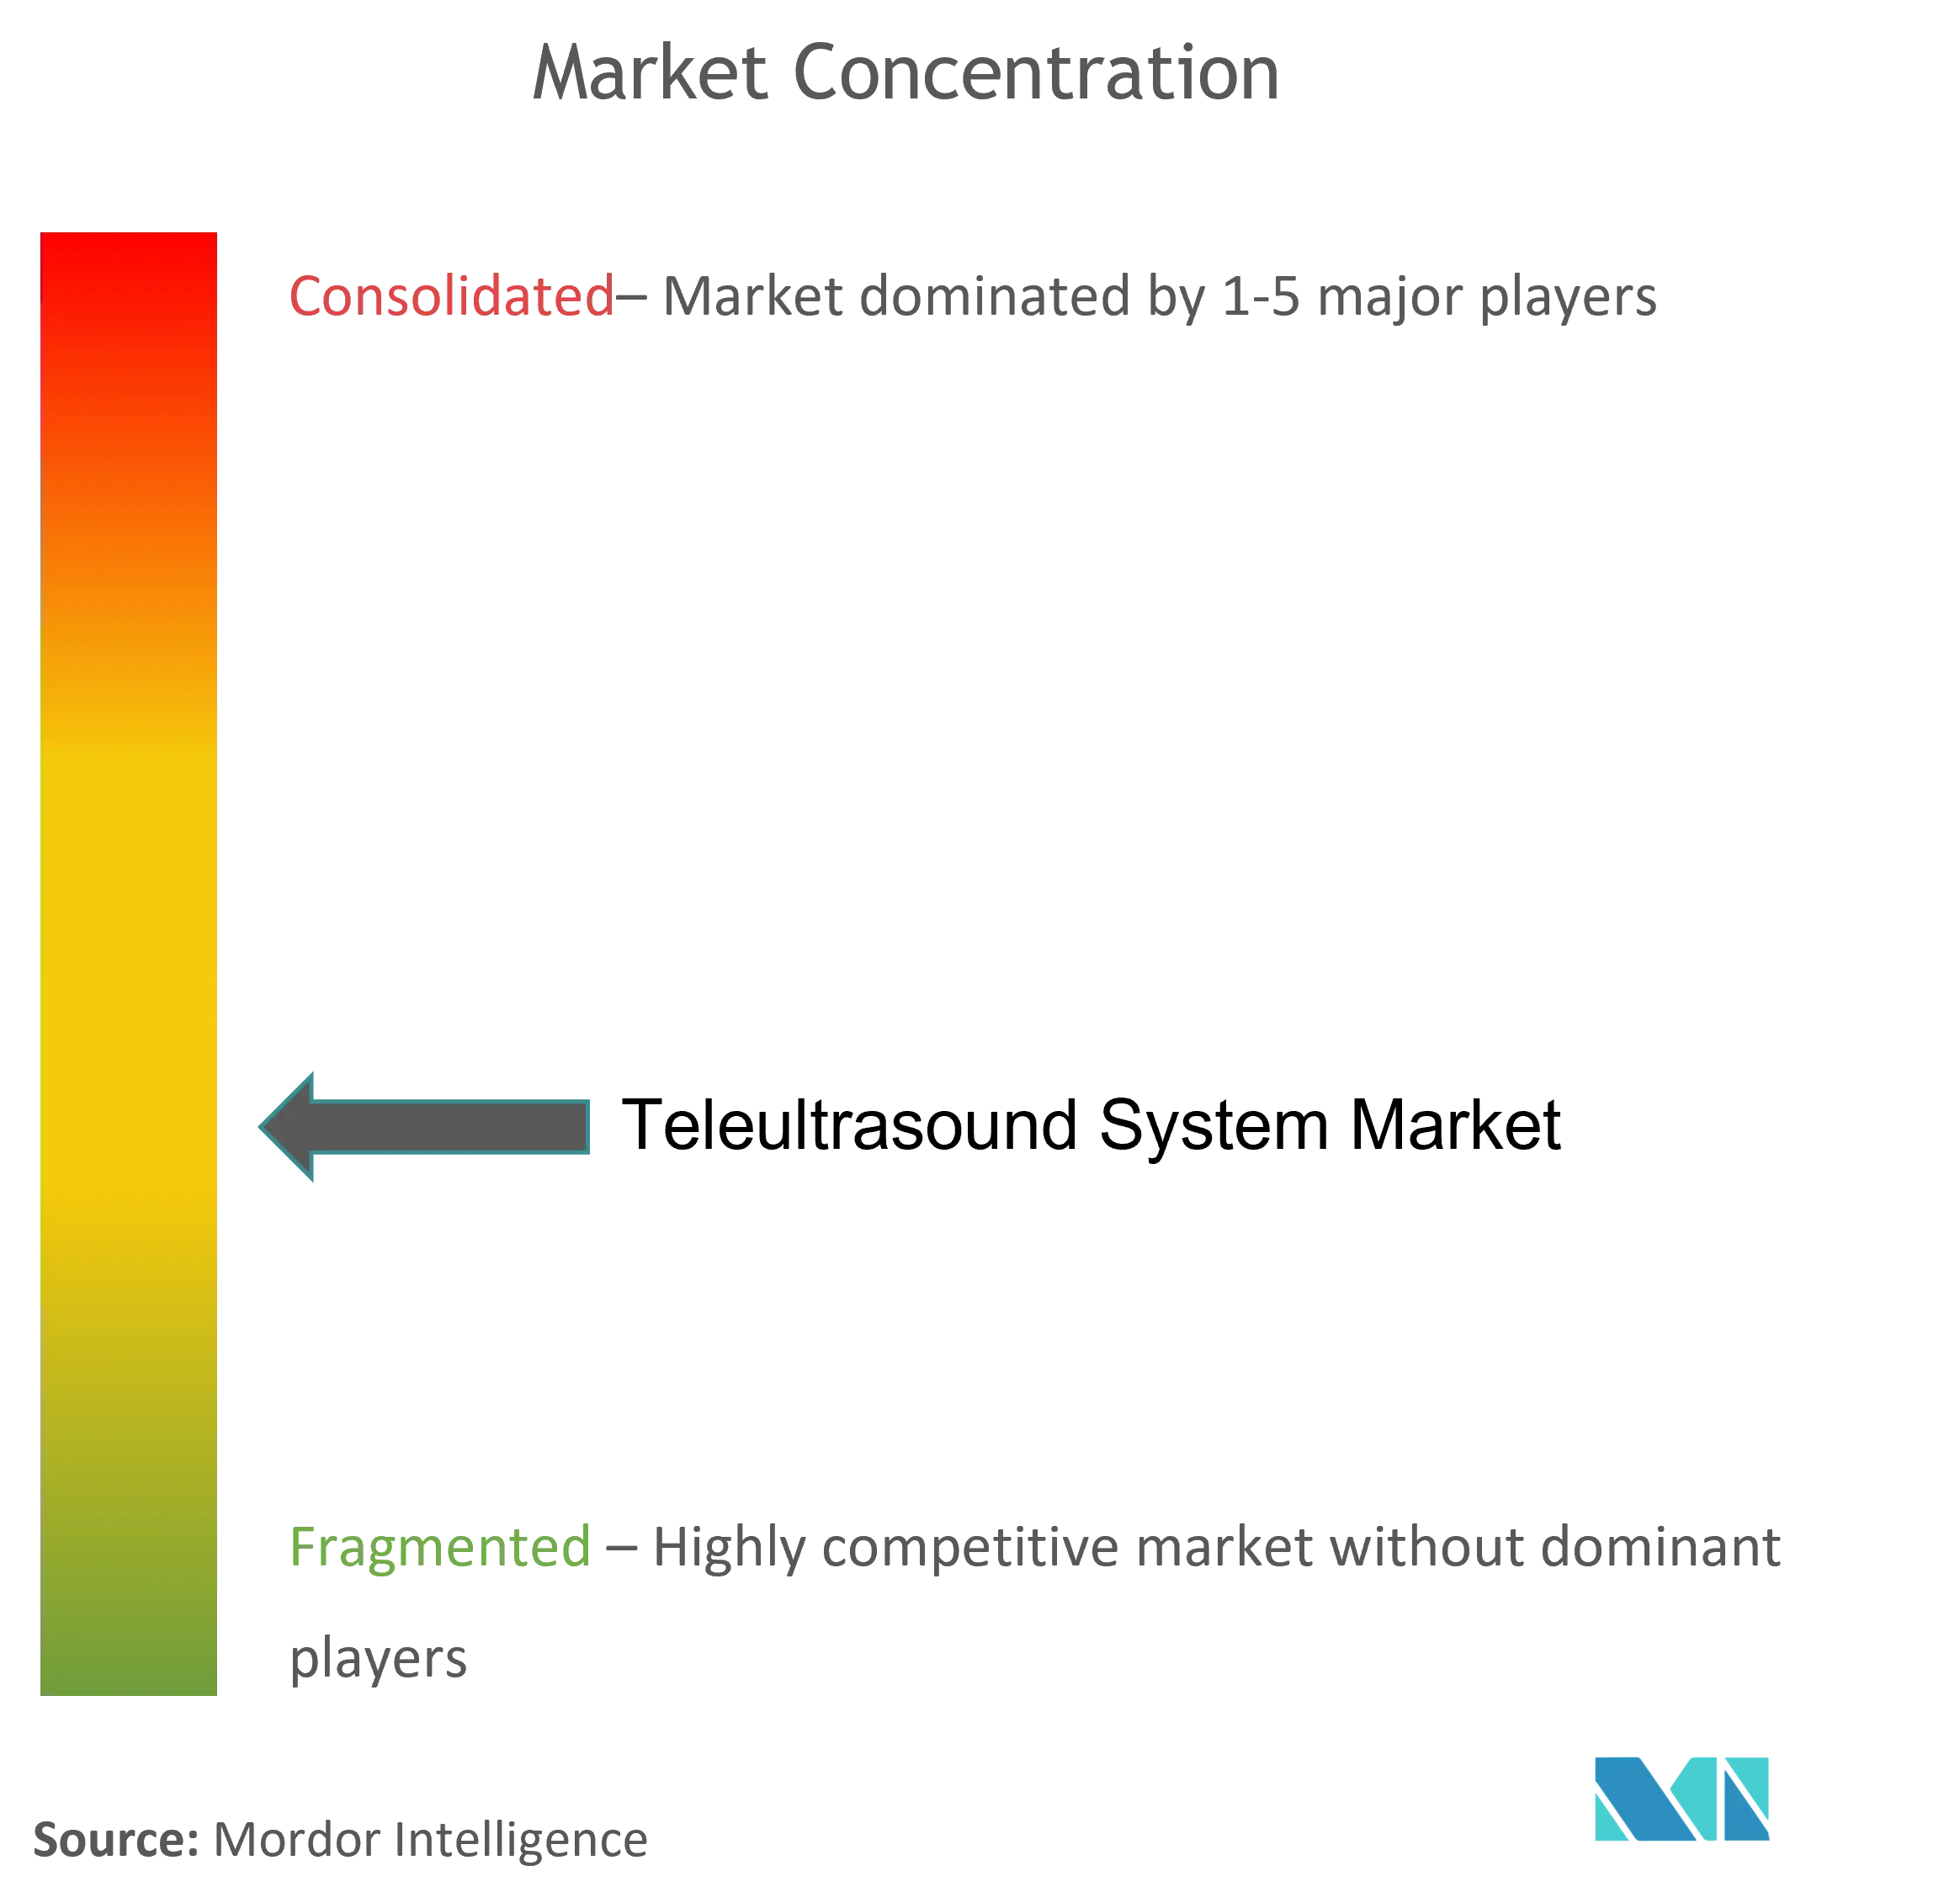 Teleultrasound System Market Concentration